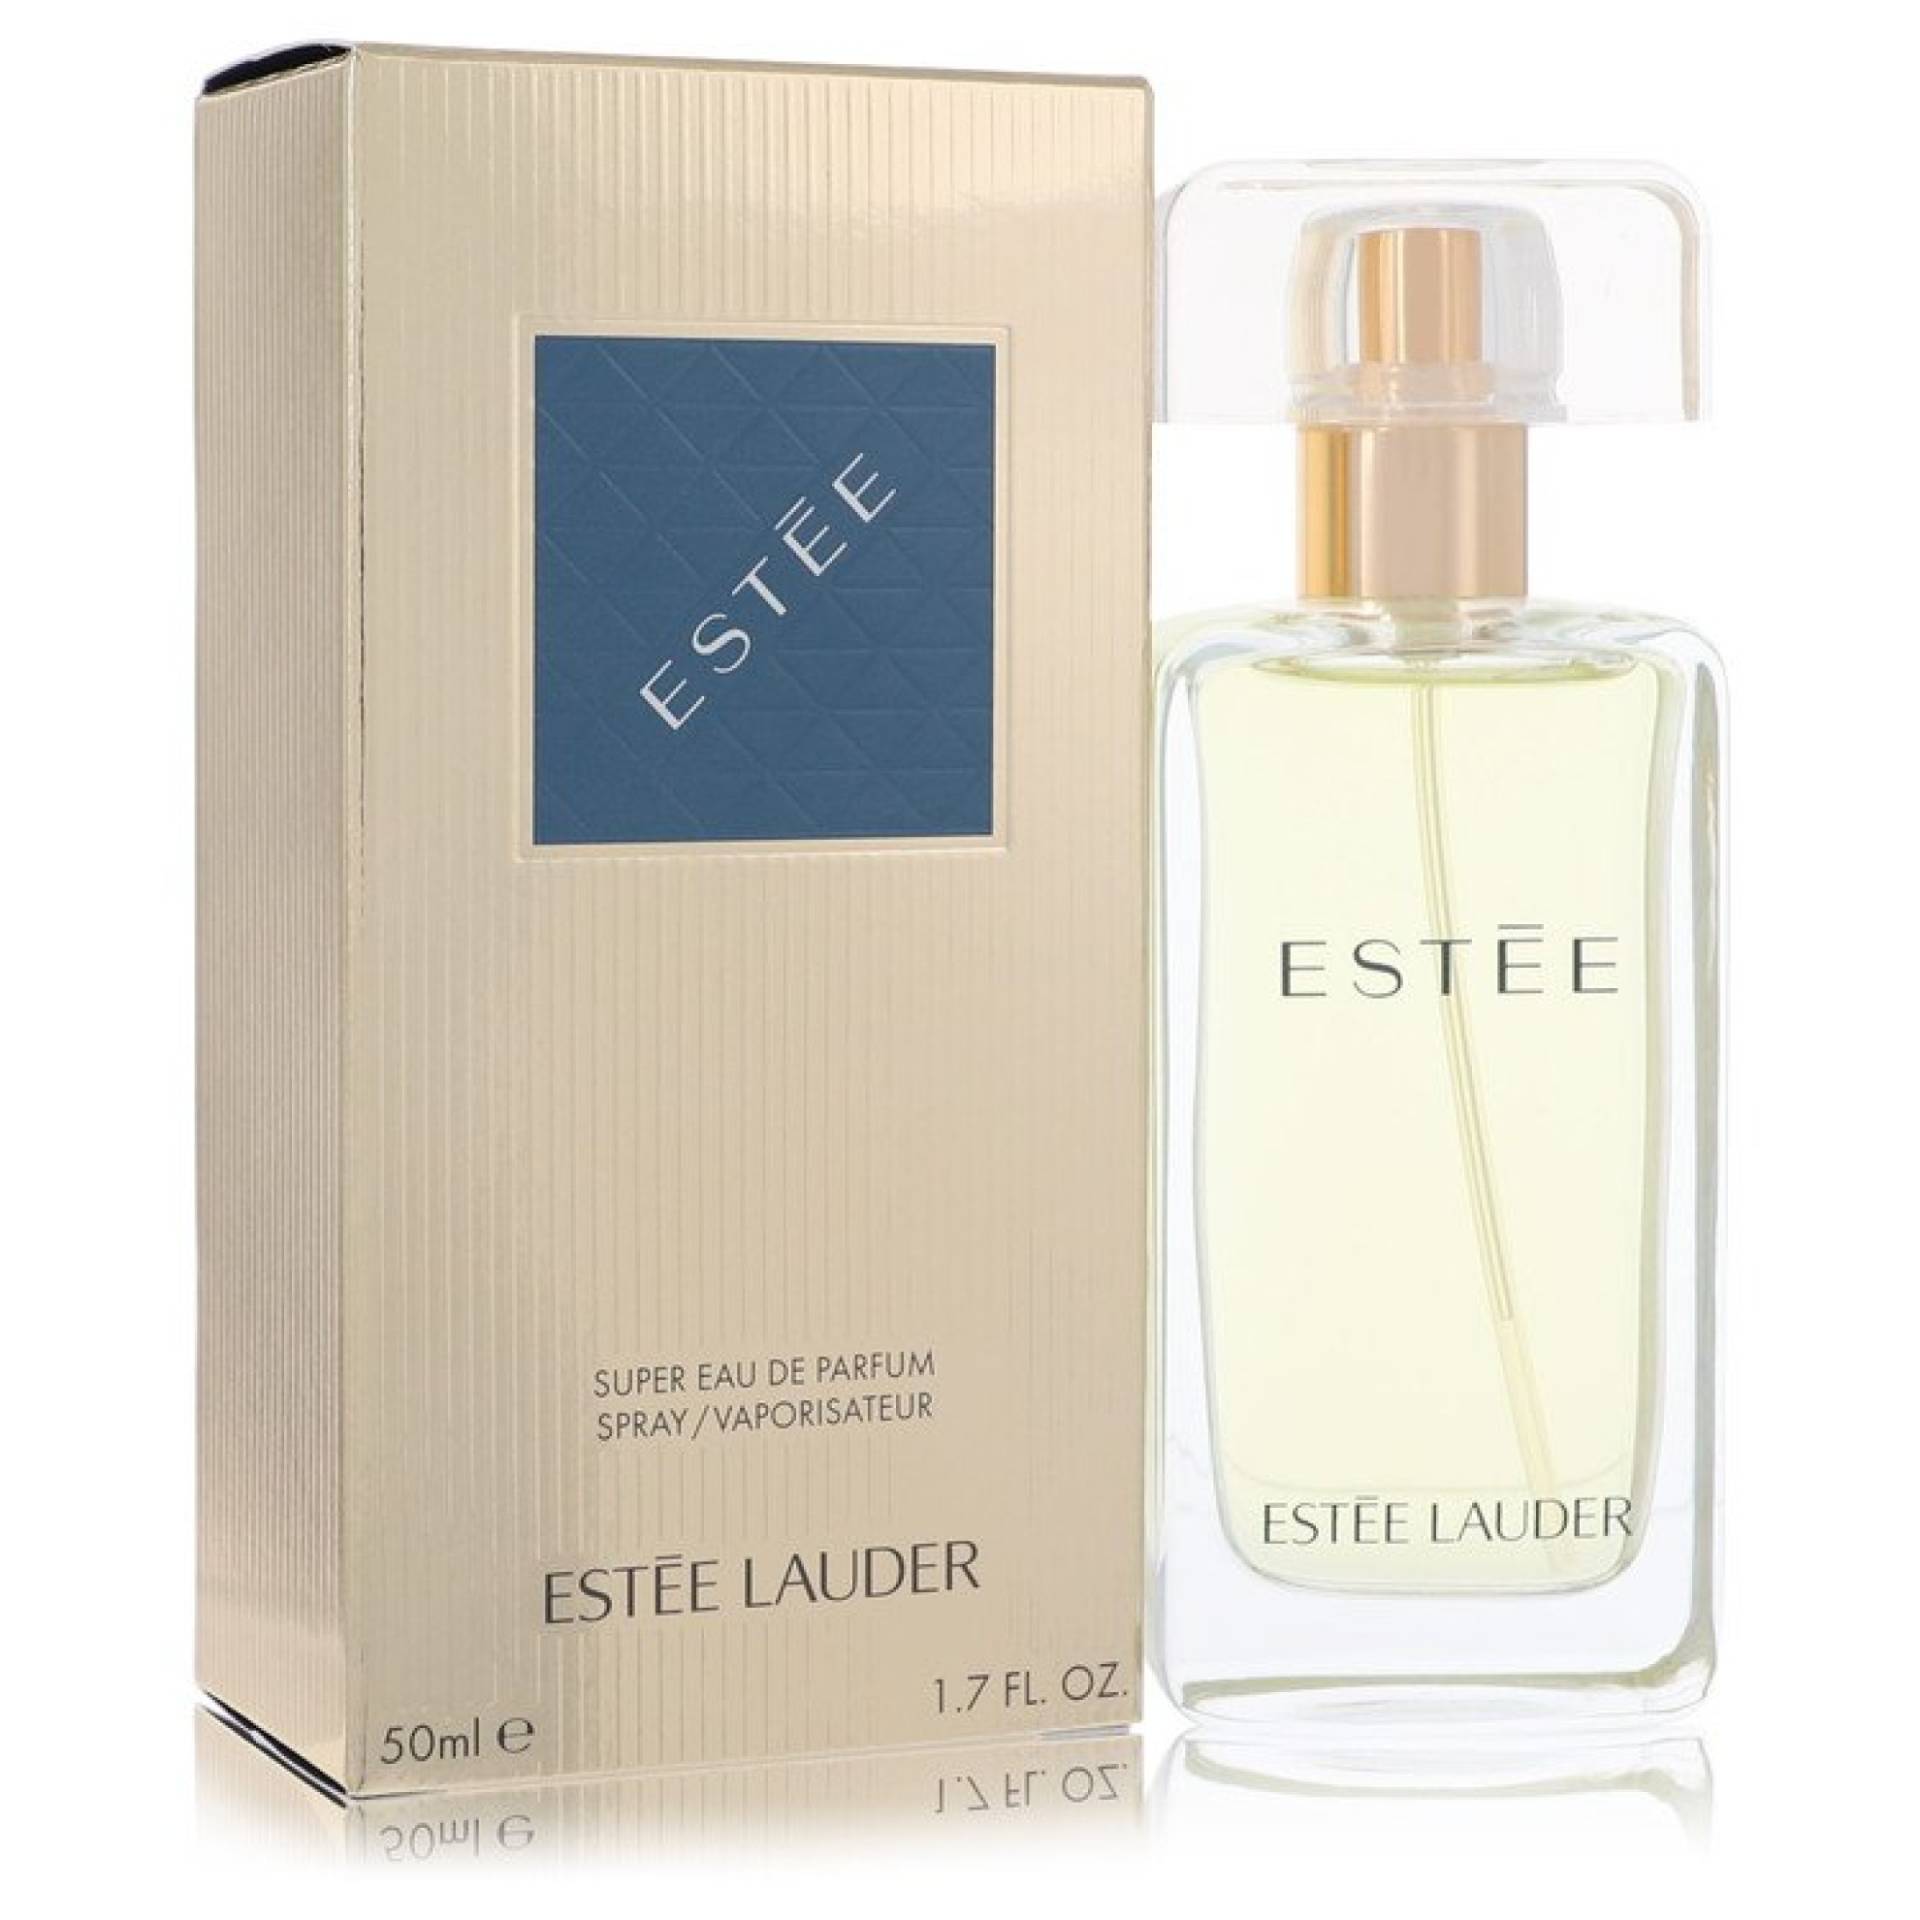 Estee Lauder ESTEE Super Eau De Parfum Spray 50 ml von Estee Lauder